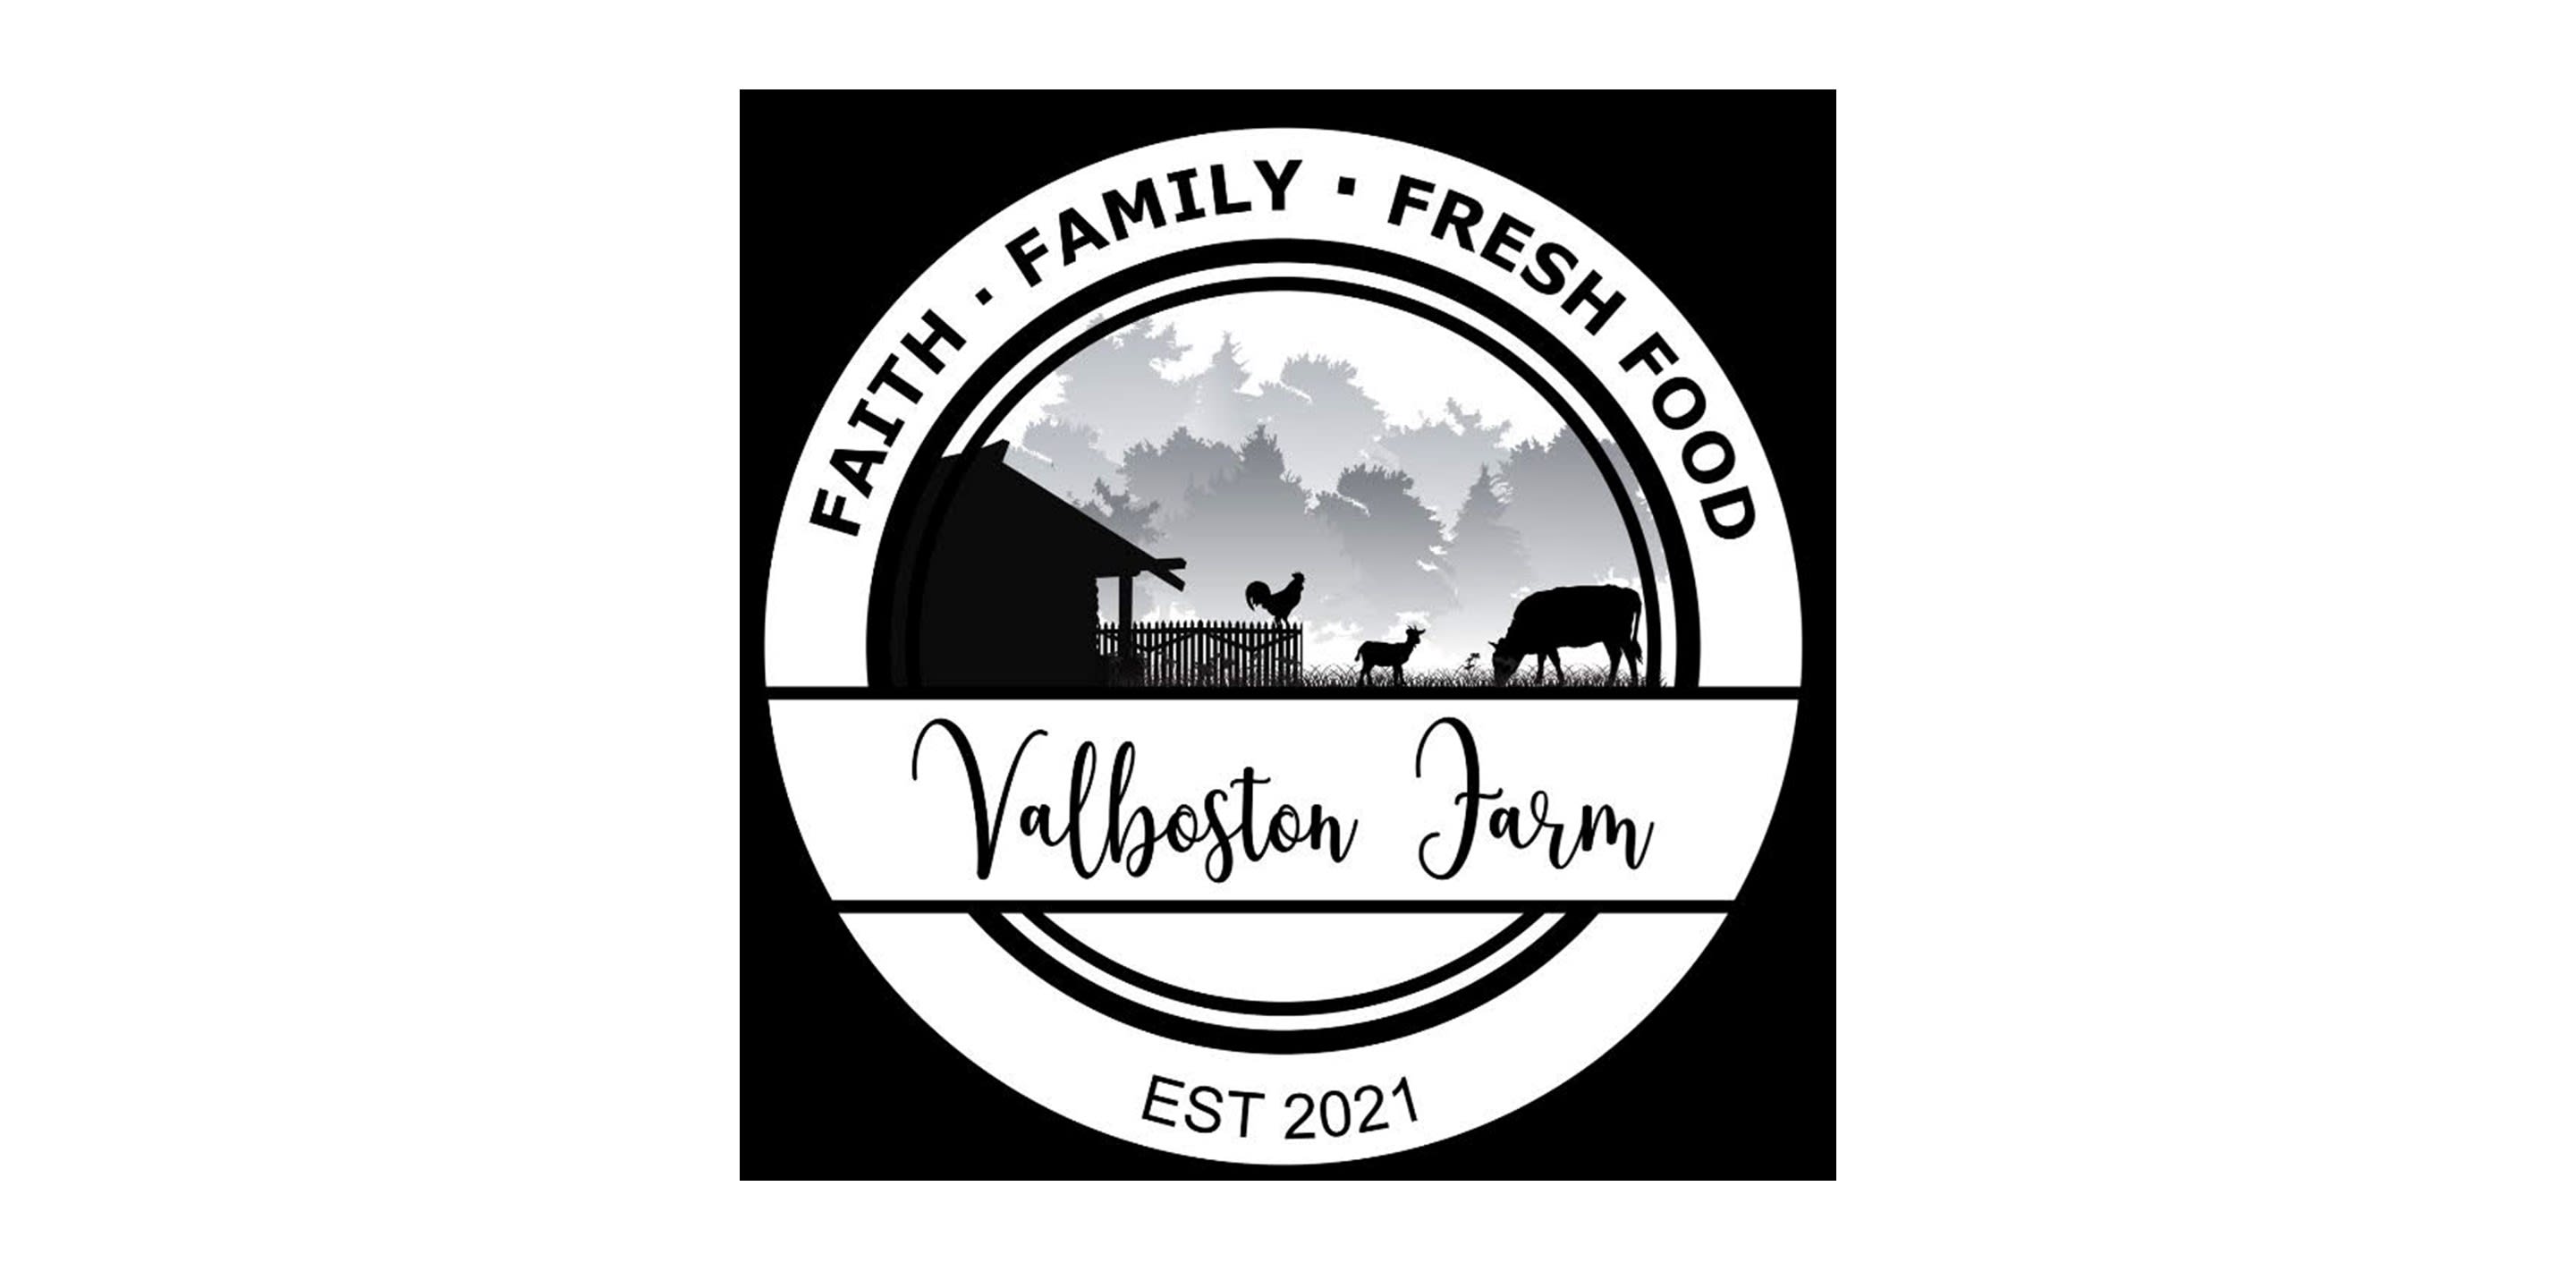 Valboston Farm